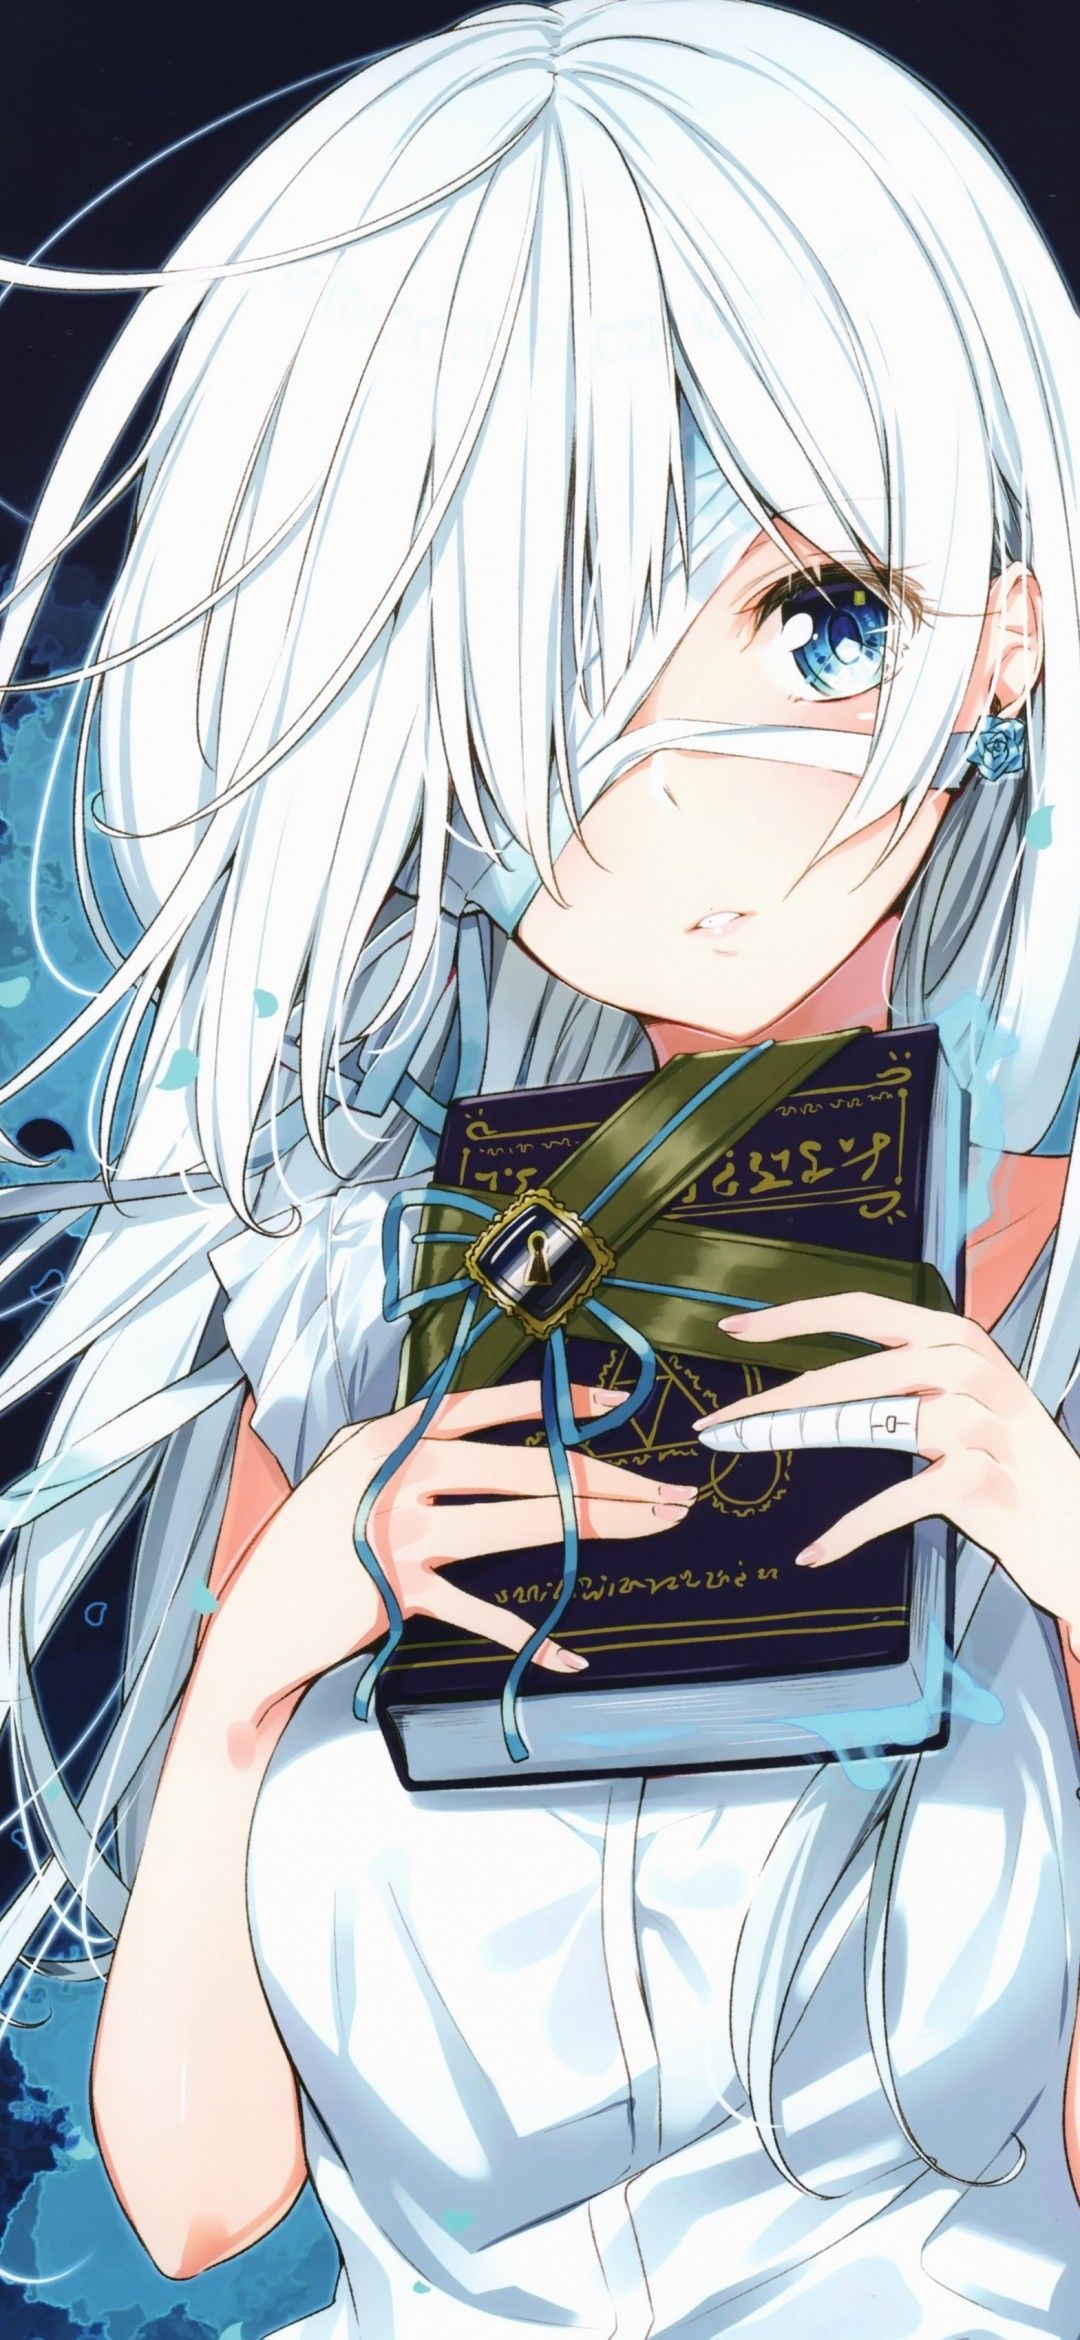 Download 1080x2340 Anime Girl, Bandage, White Hair, Blue Eye, Book